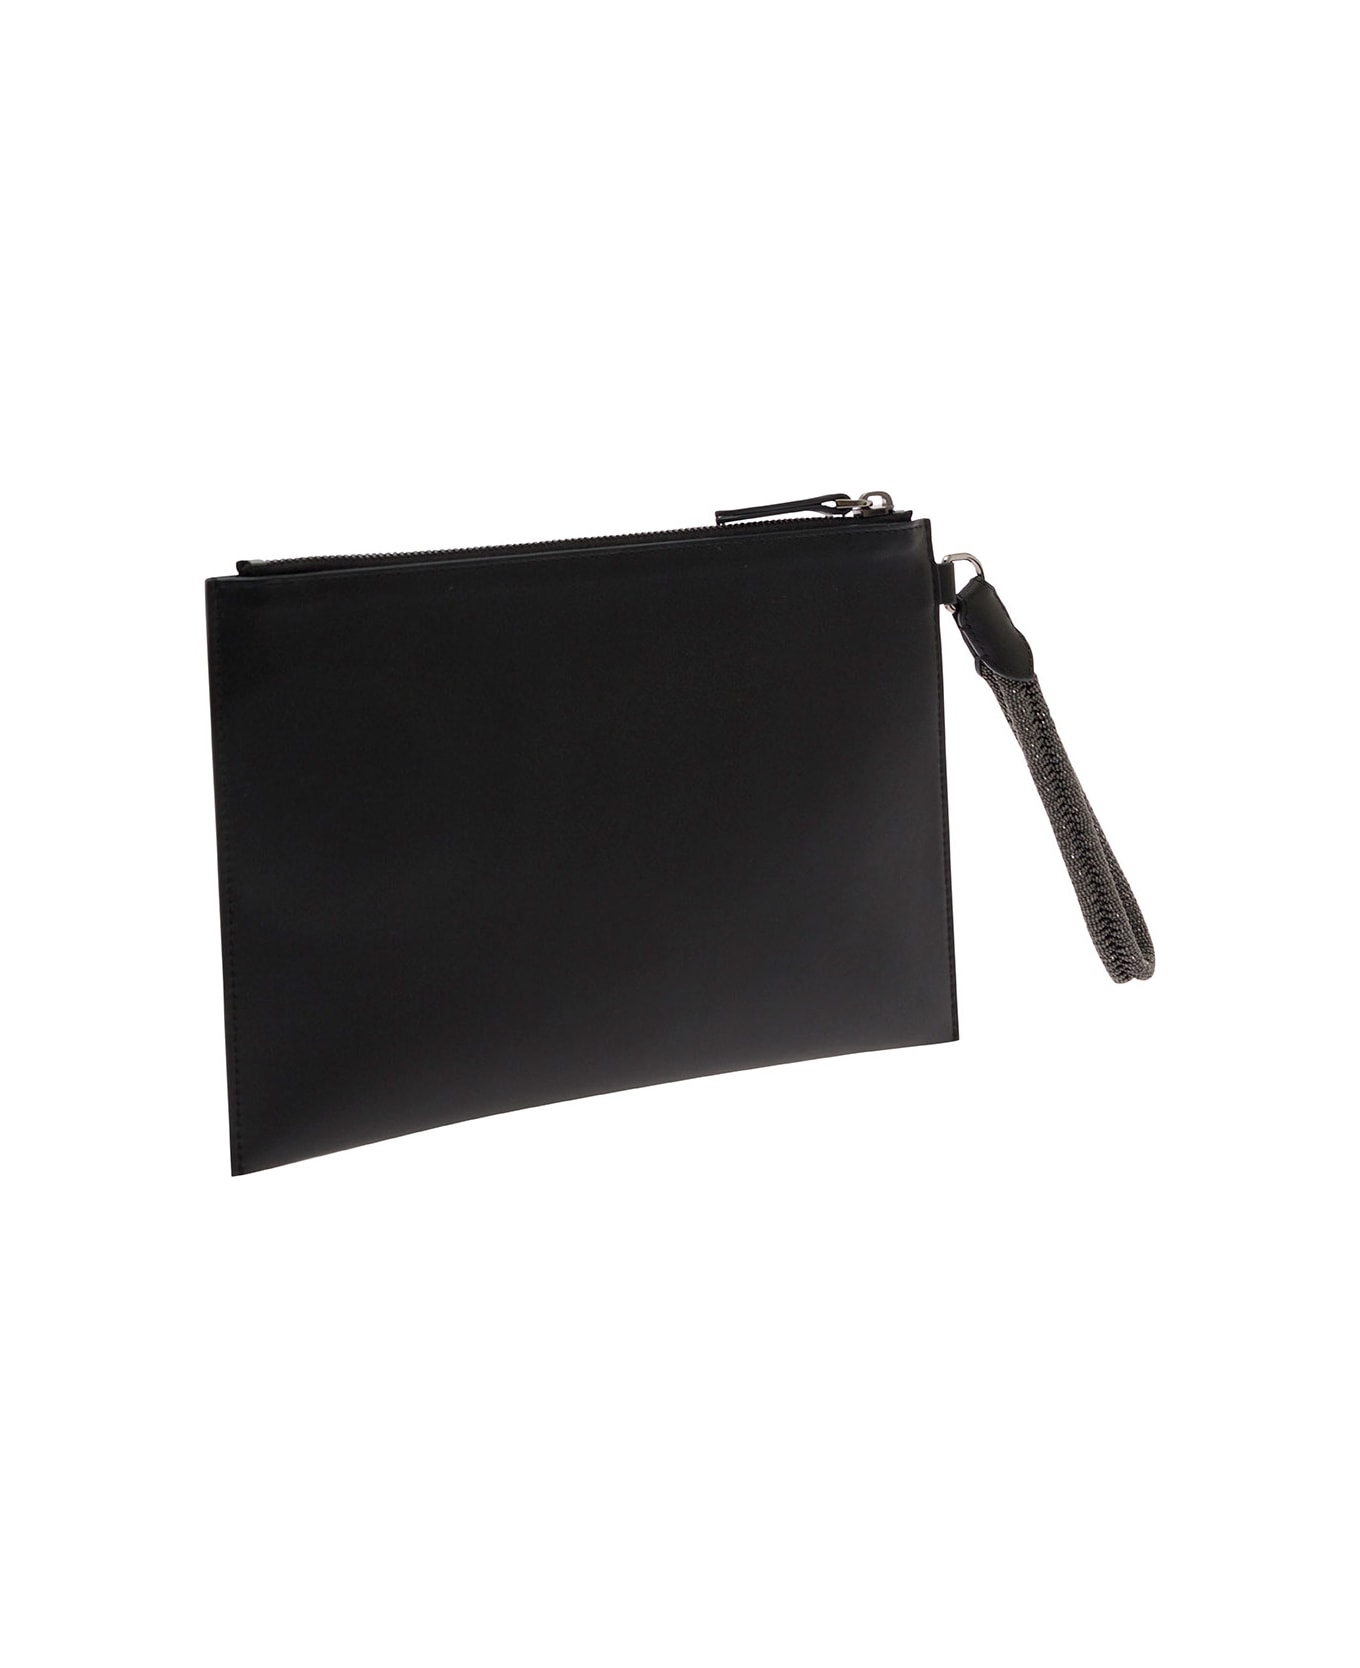 Brunello Cucinelli Black Clutch With Monile Wrist Strap In Leather Woman - Black クラッチバッグ